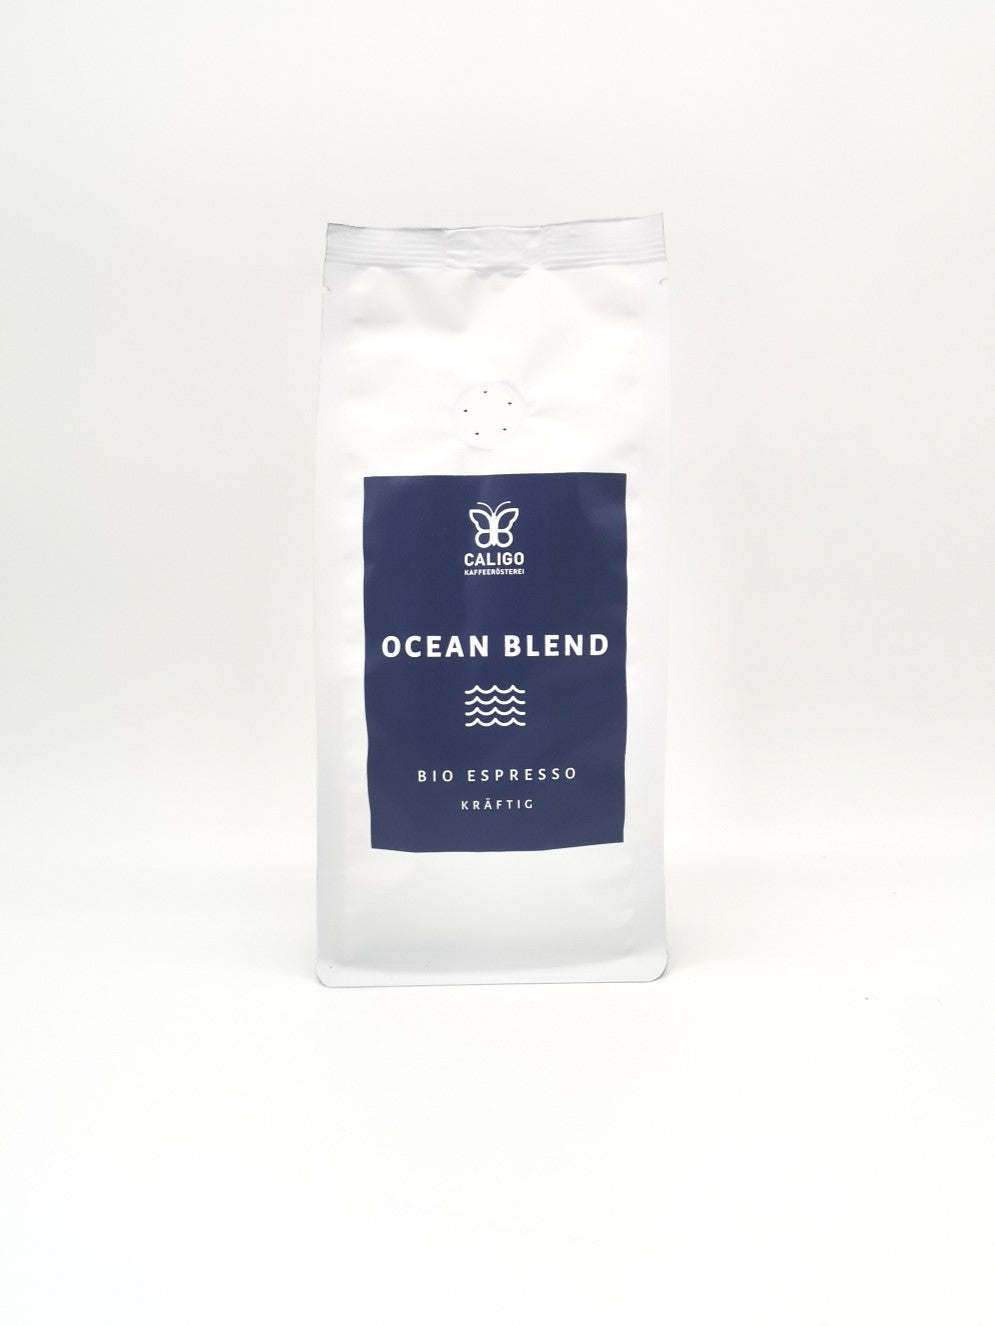 Ocean Blend - BIO - Espresso - PROJEKTKAFFEE